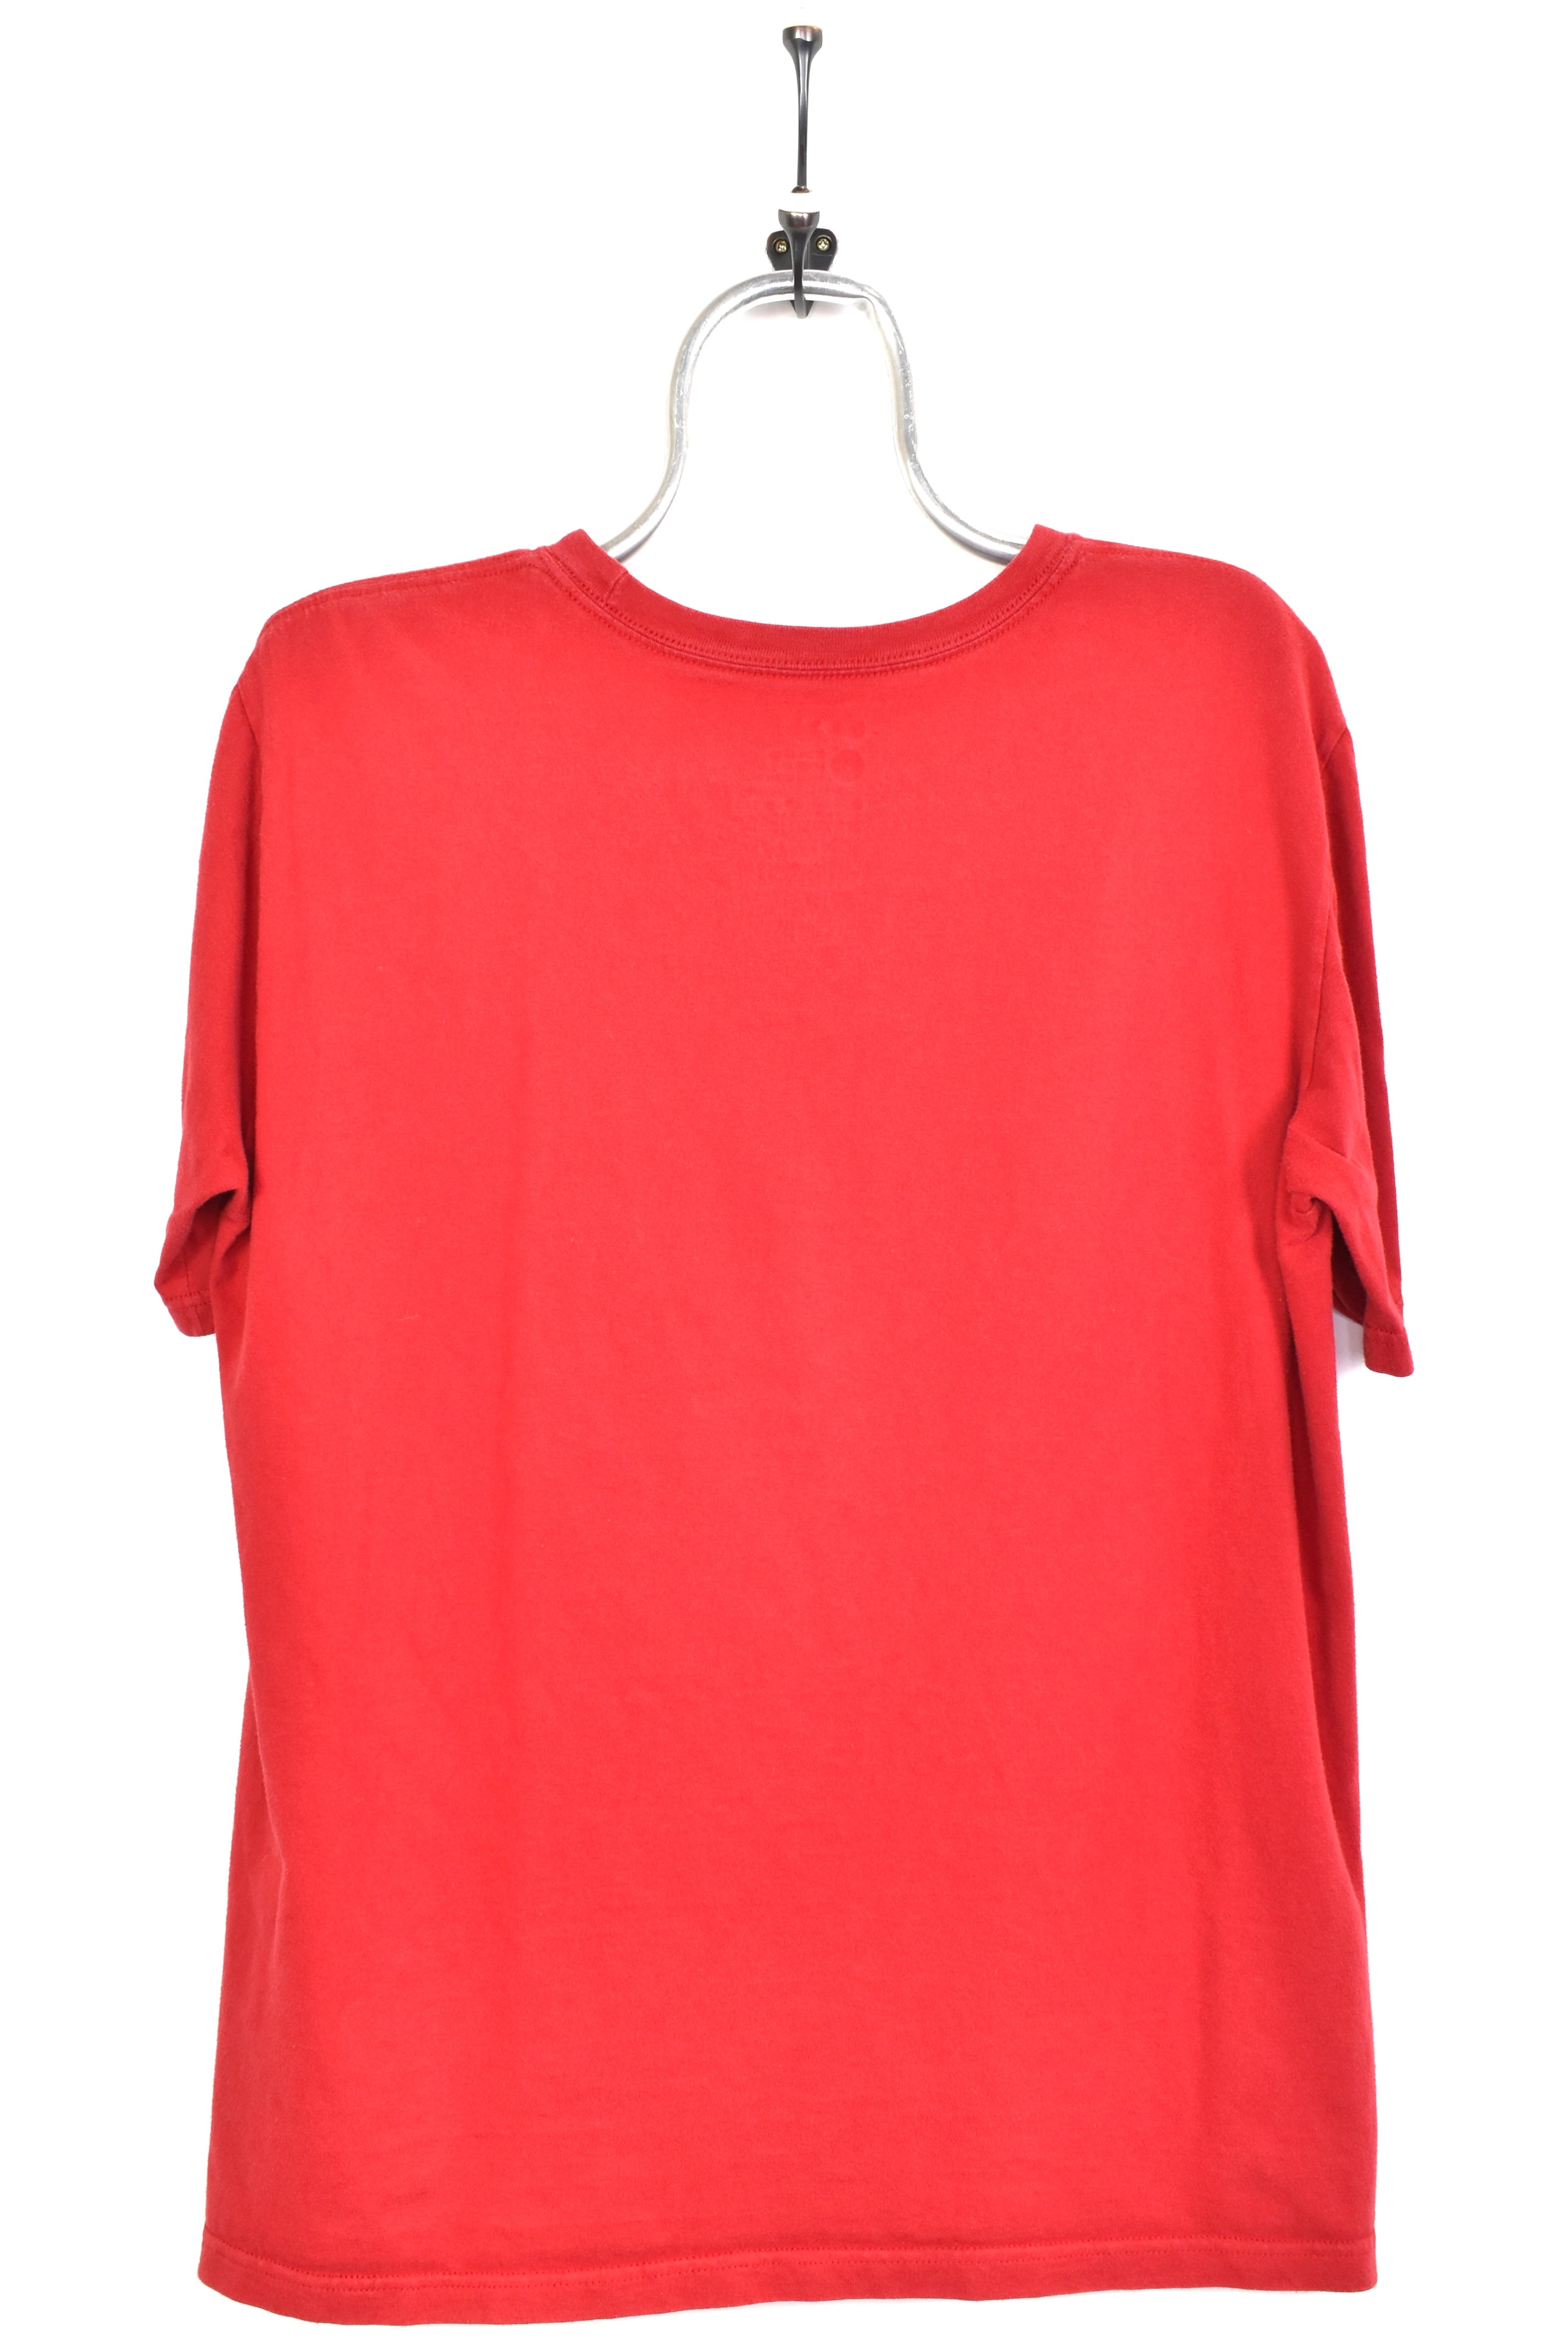 Modern Philadelphia Phillies shirt, 2015 short sleeve graphic tee - medium, red PRO SPORT